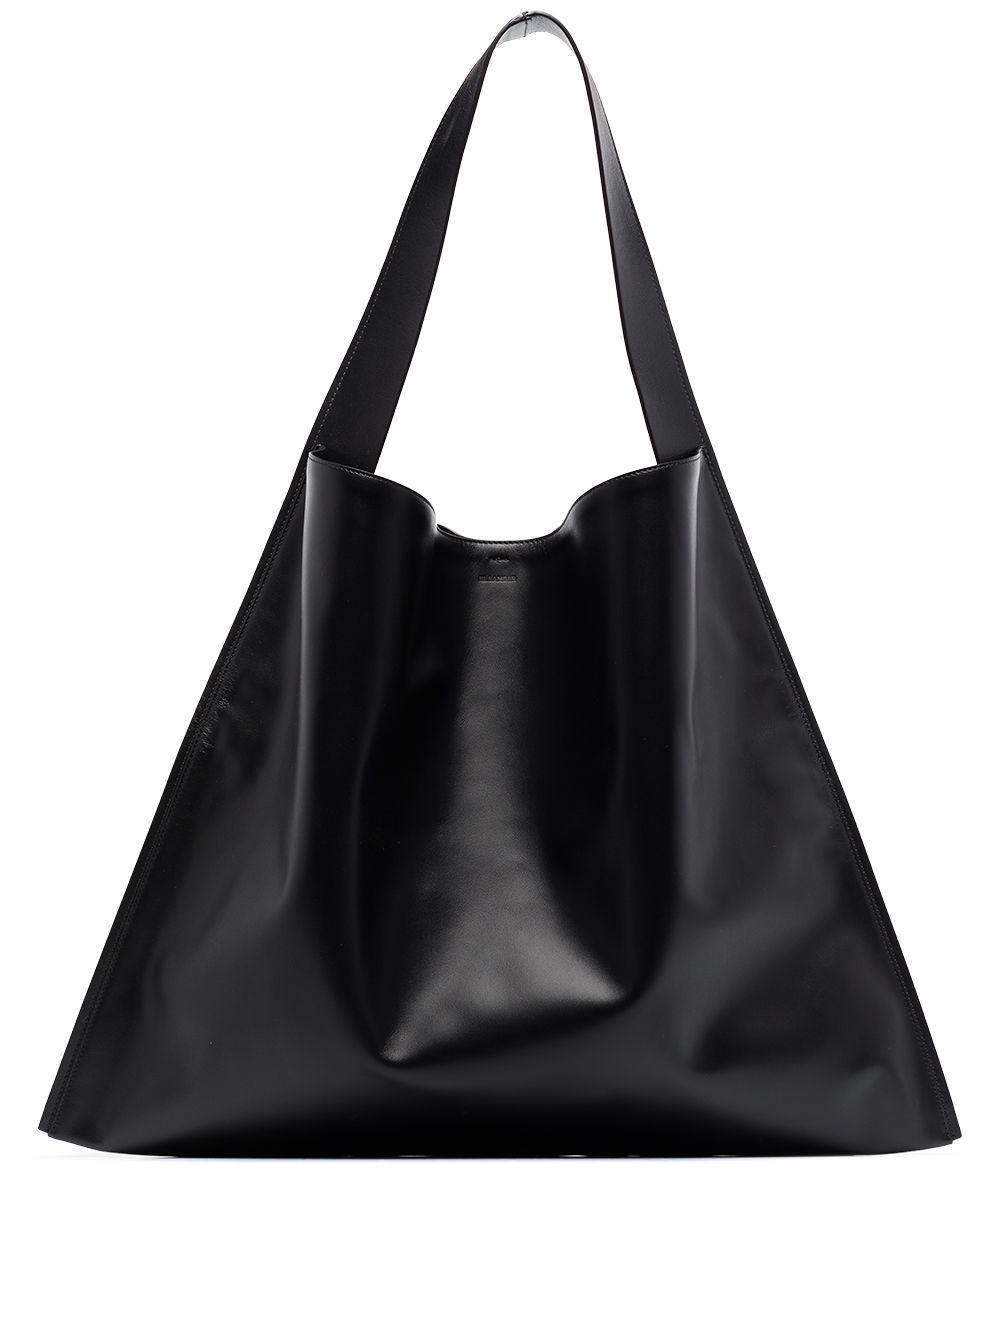 Jil Sander Leather Oversized Tote Bag in Black | Lyst